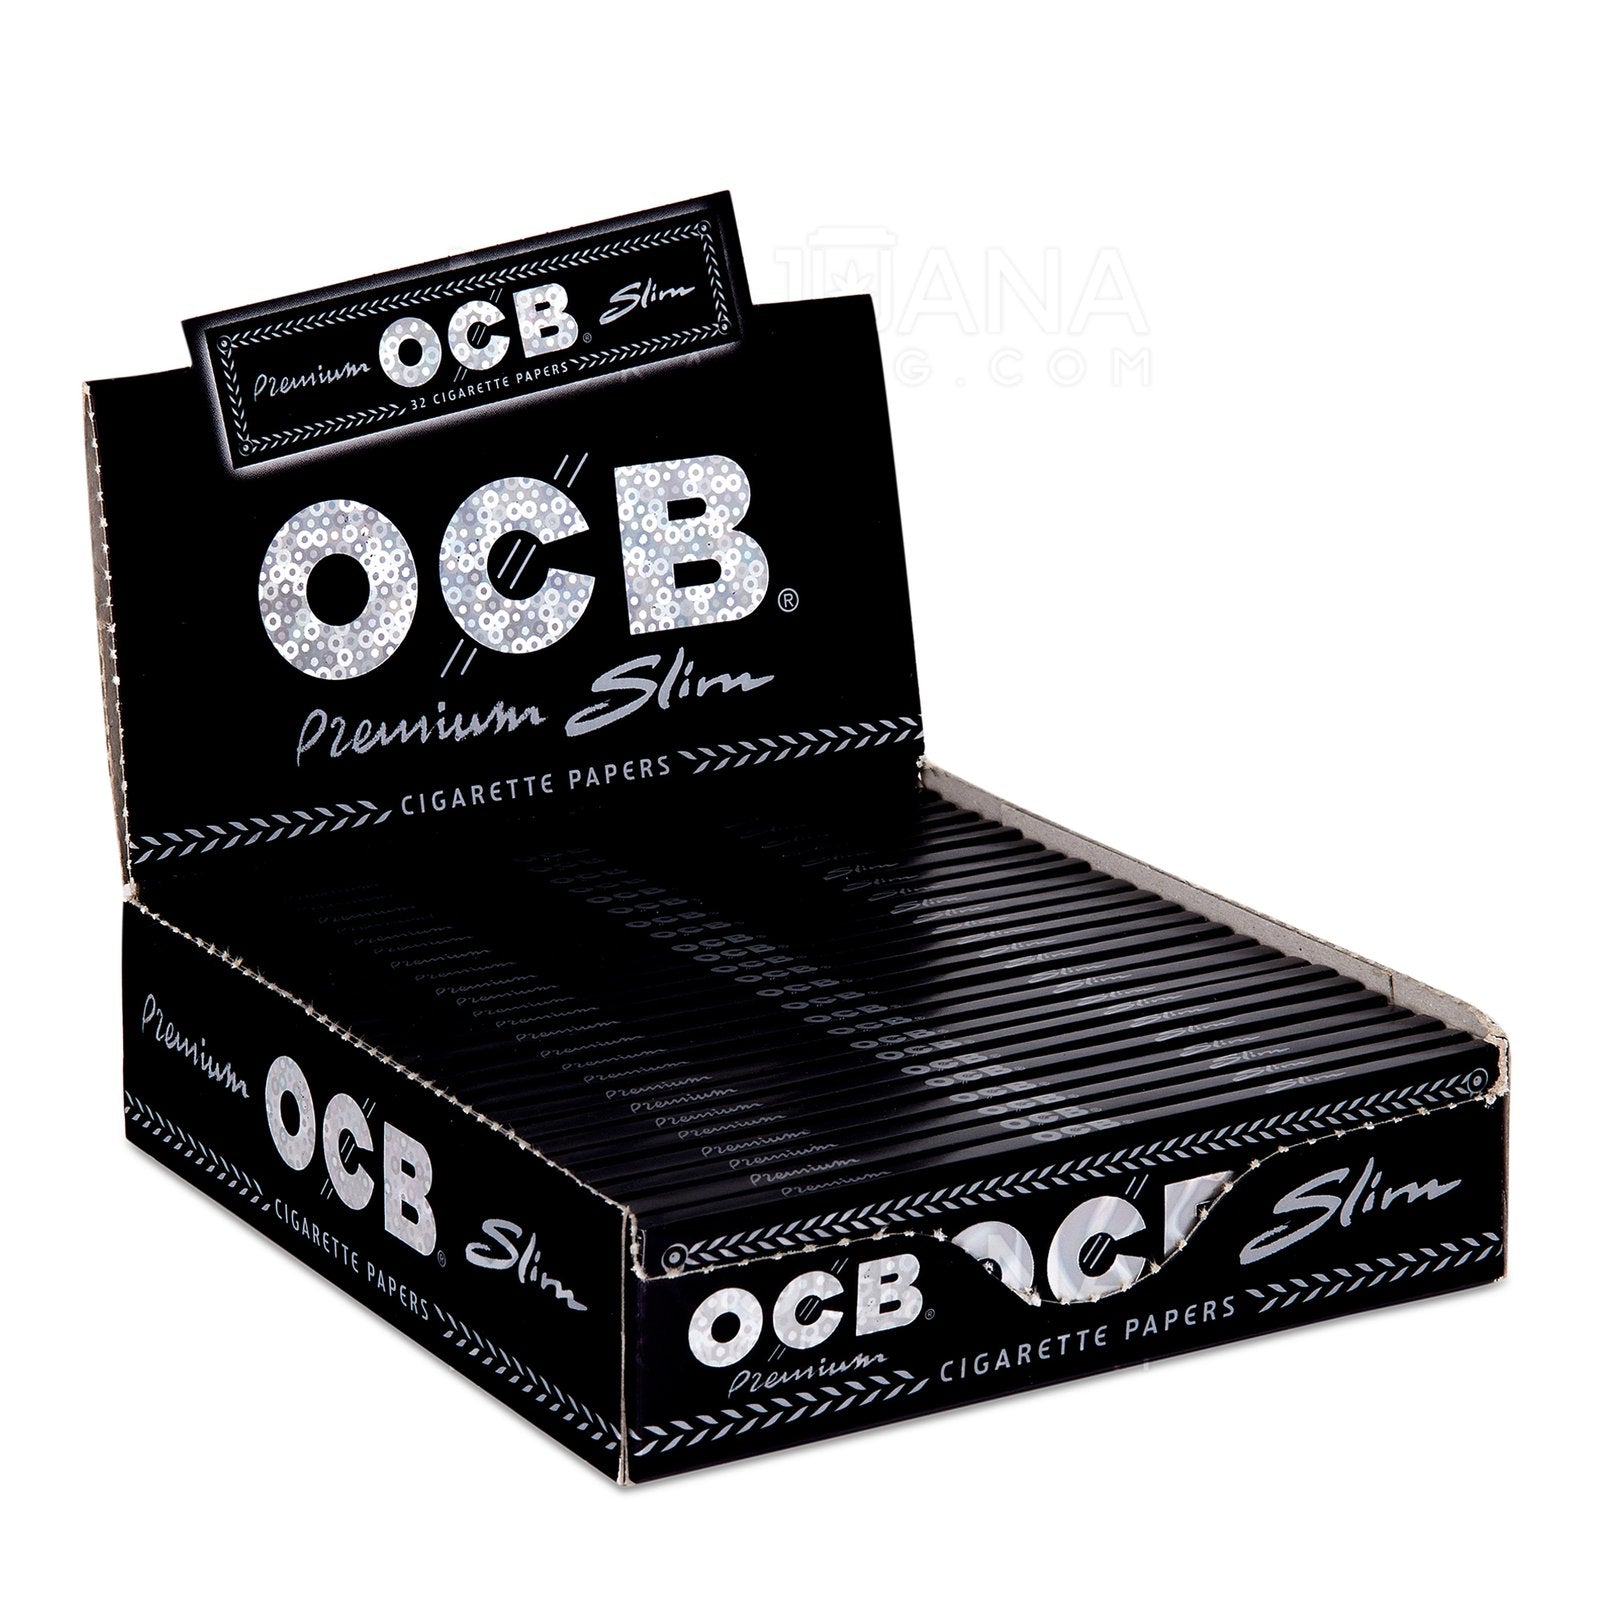 ocb premium rolling papers king size slim black display box